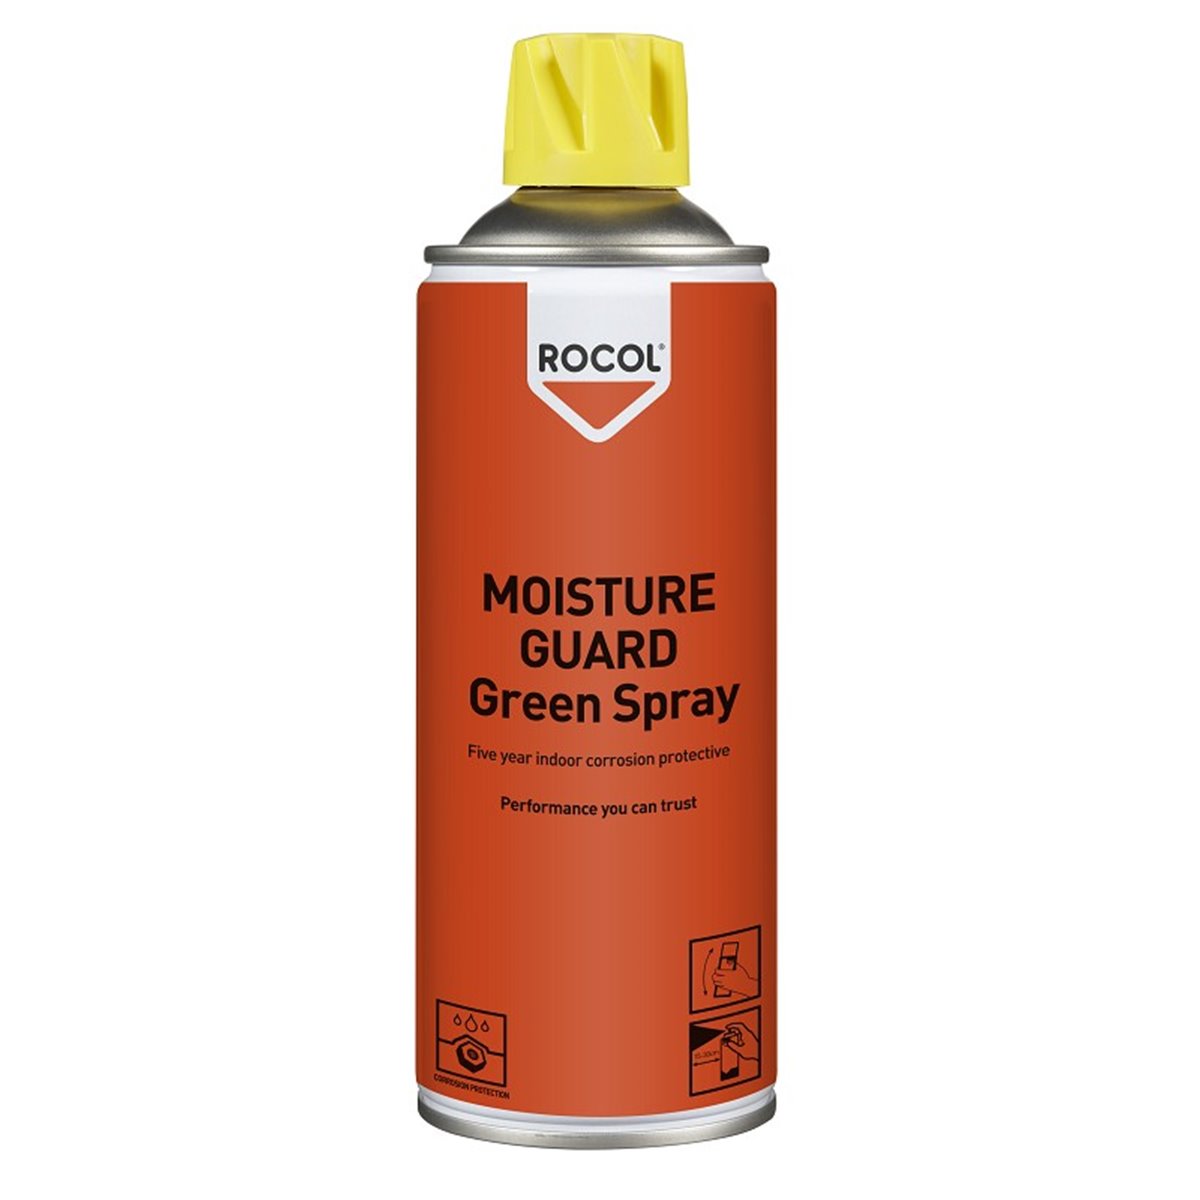 MOISTURE GUARD Green Spray Rocol 400ml RS69045